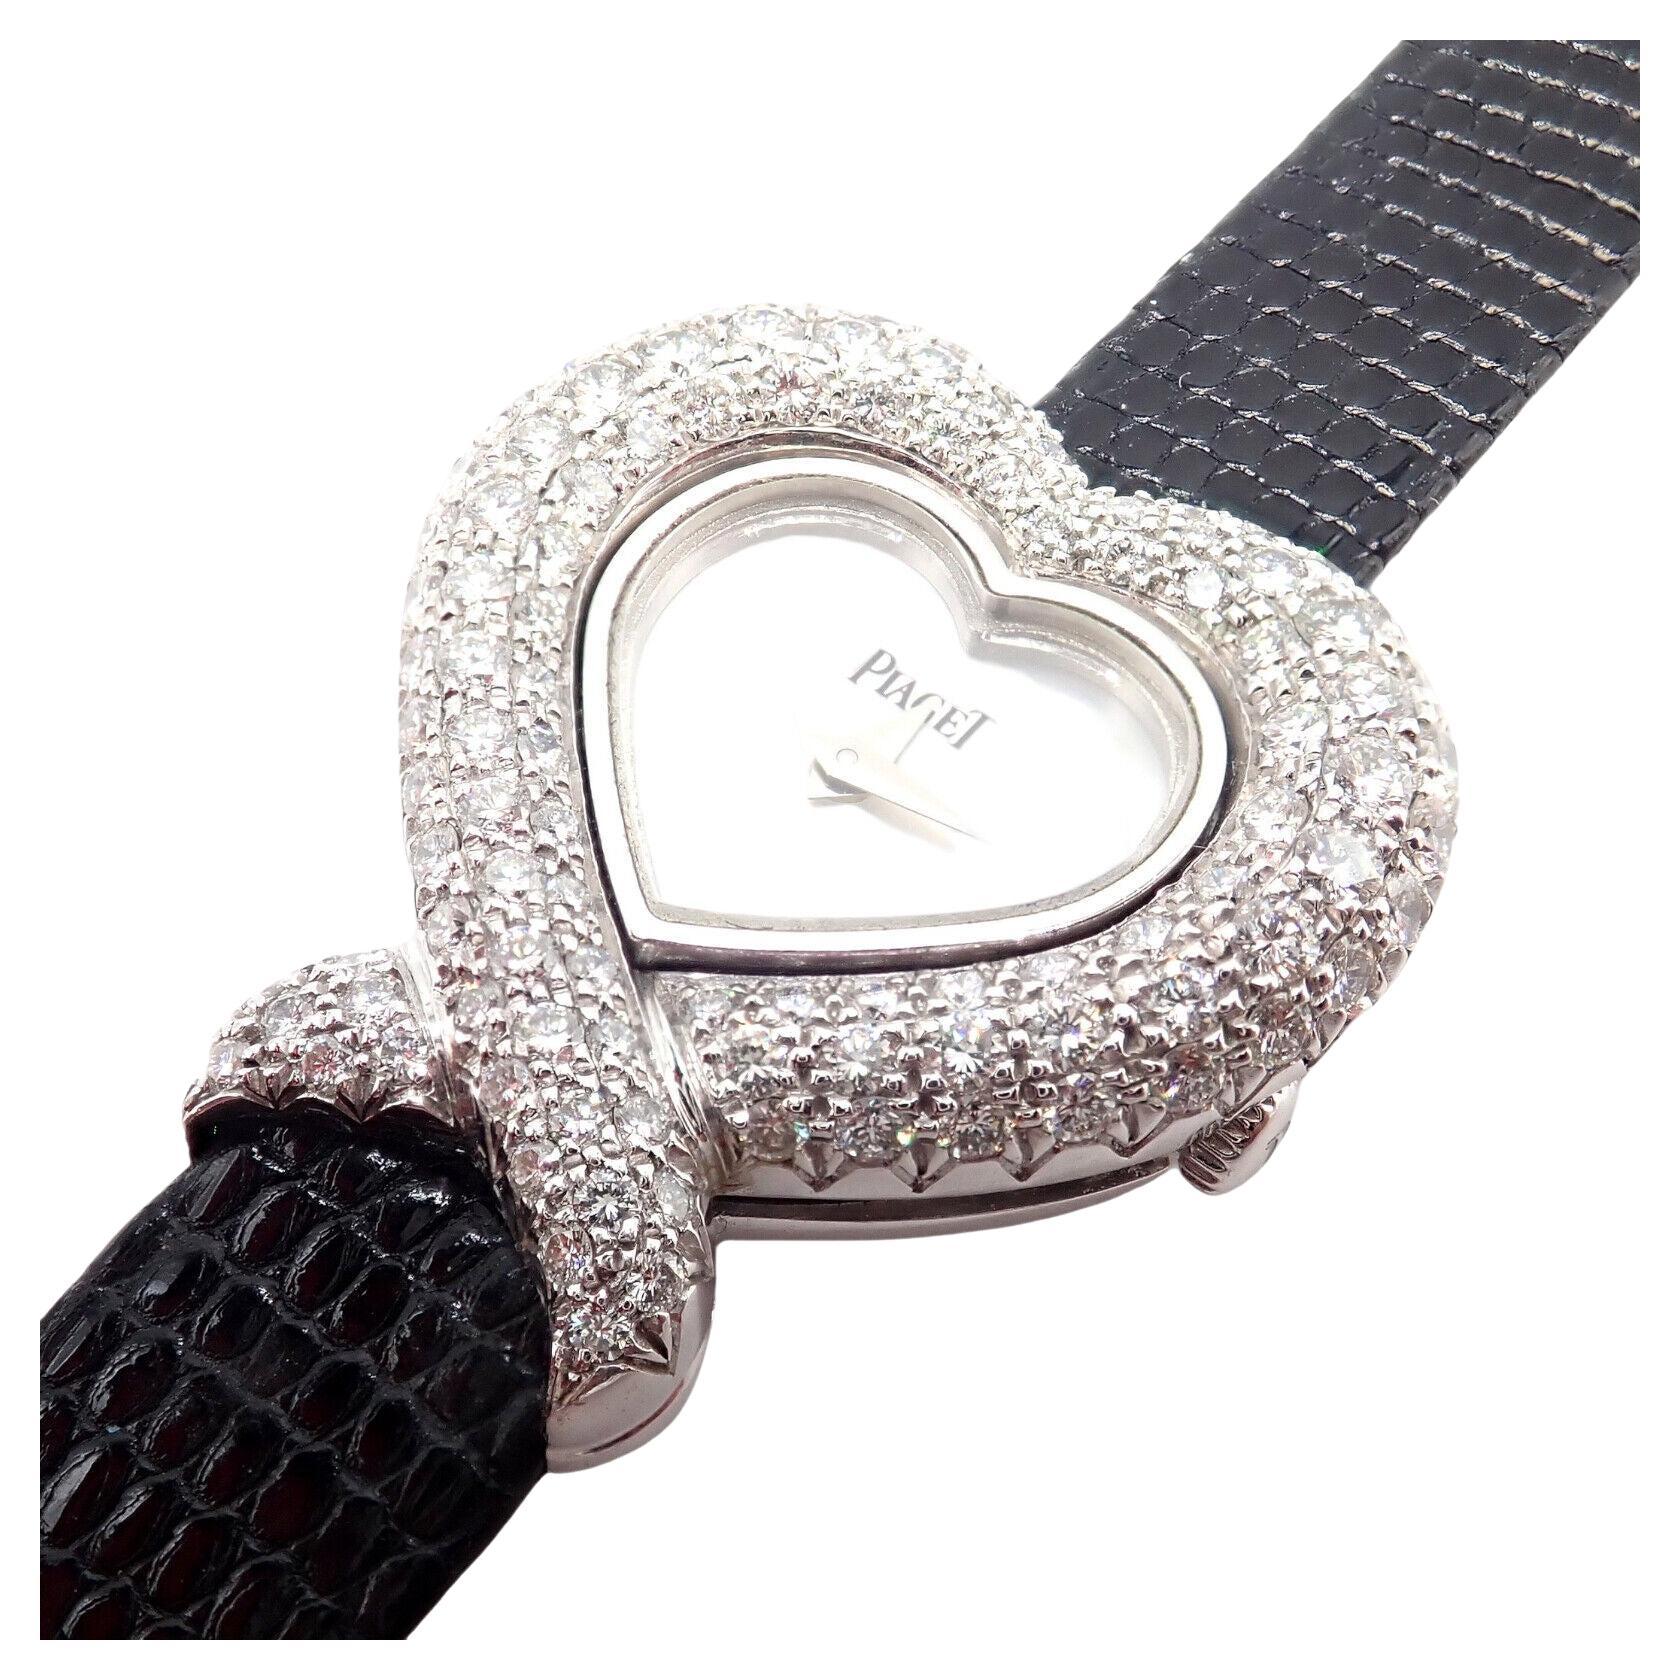 Piaget Diamond Heart Shape Ladies White Gold Watch 5285